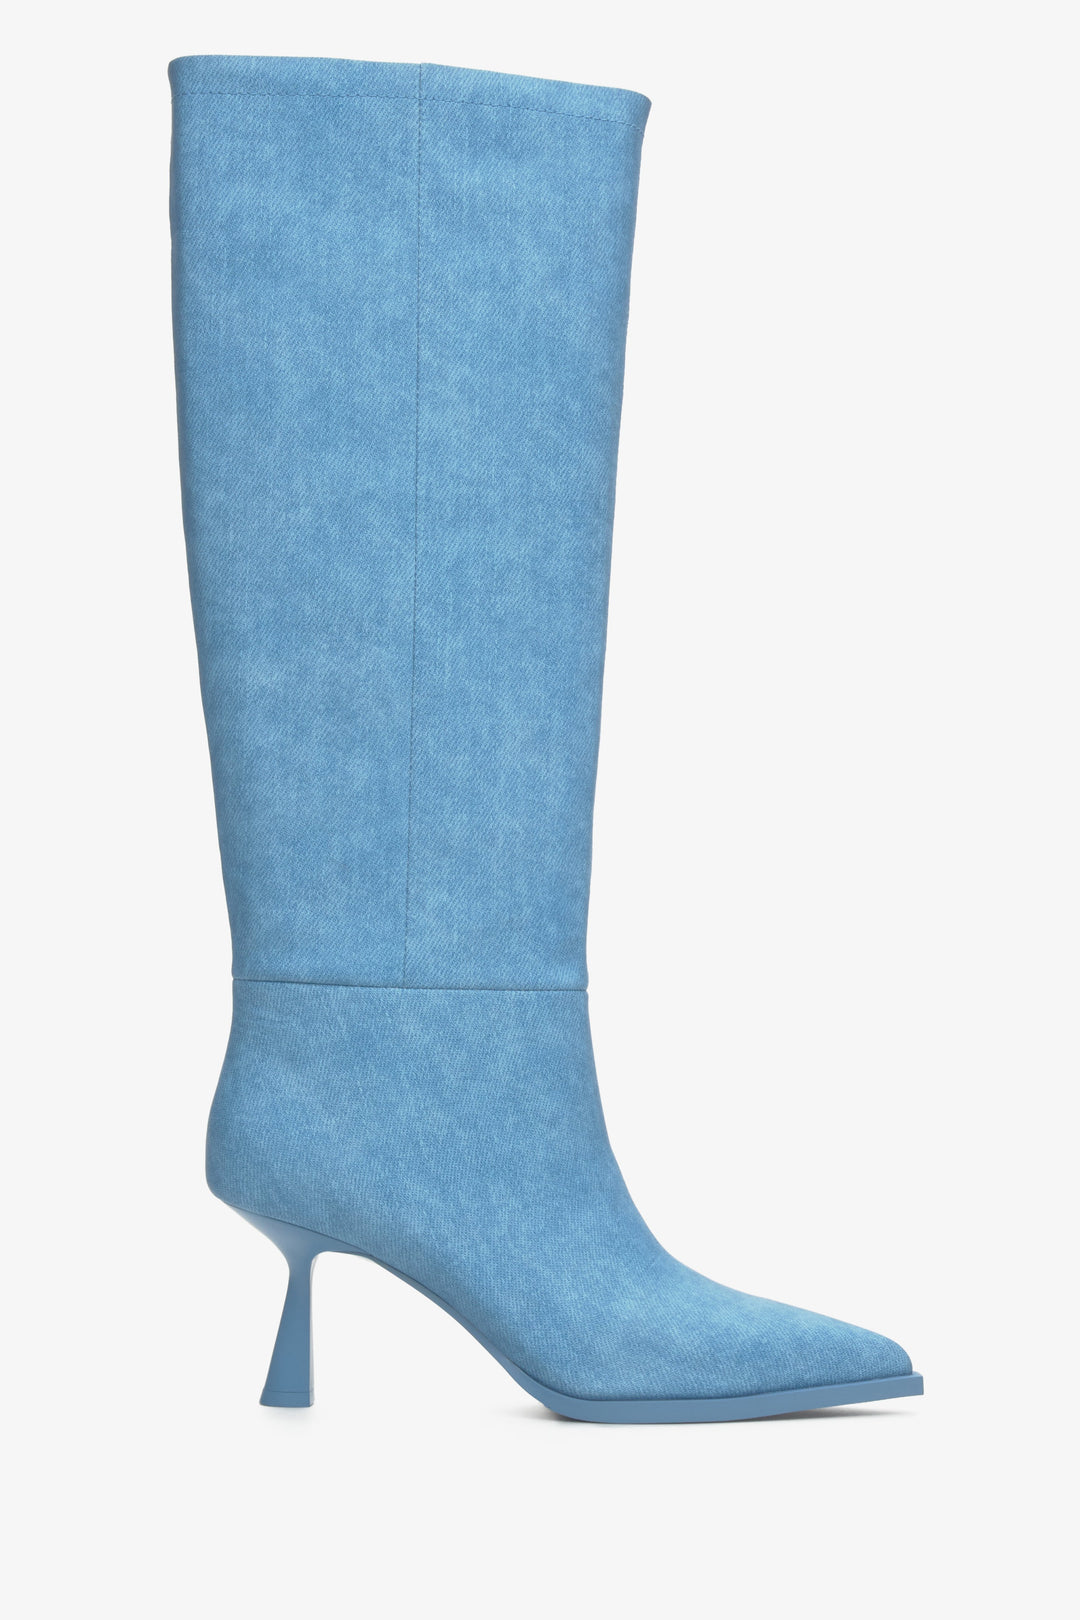 Women's blue knee-high stiletto boots by Estro.